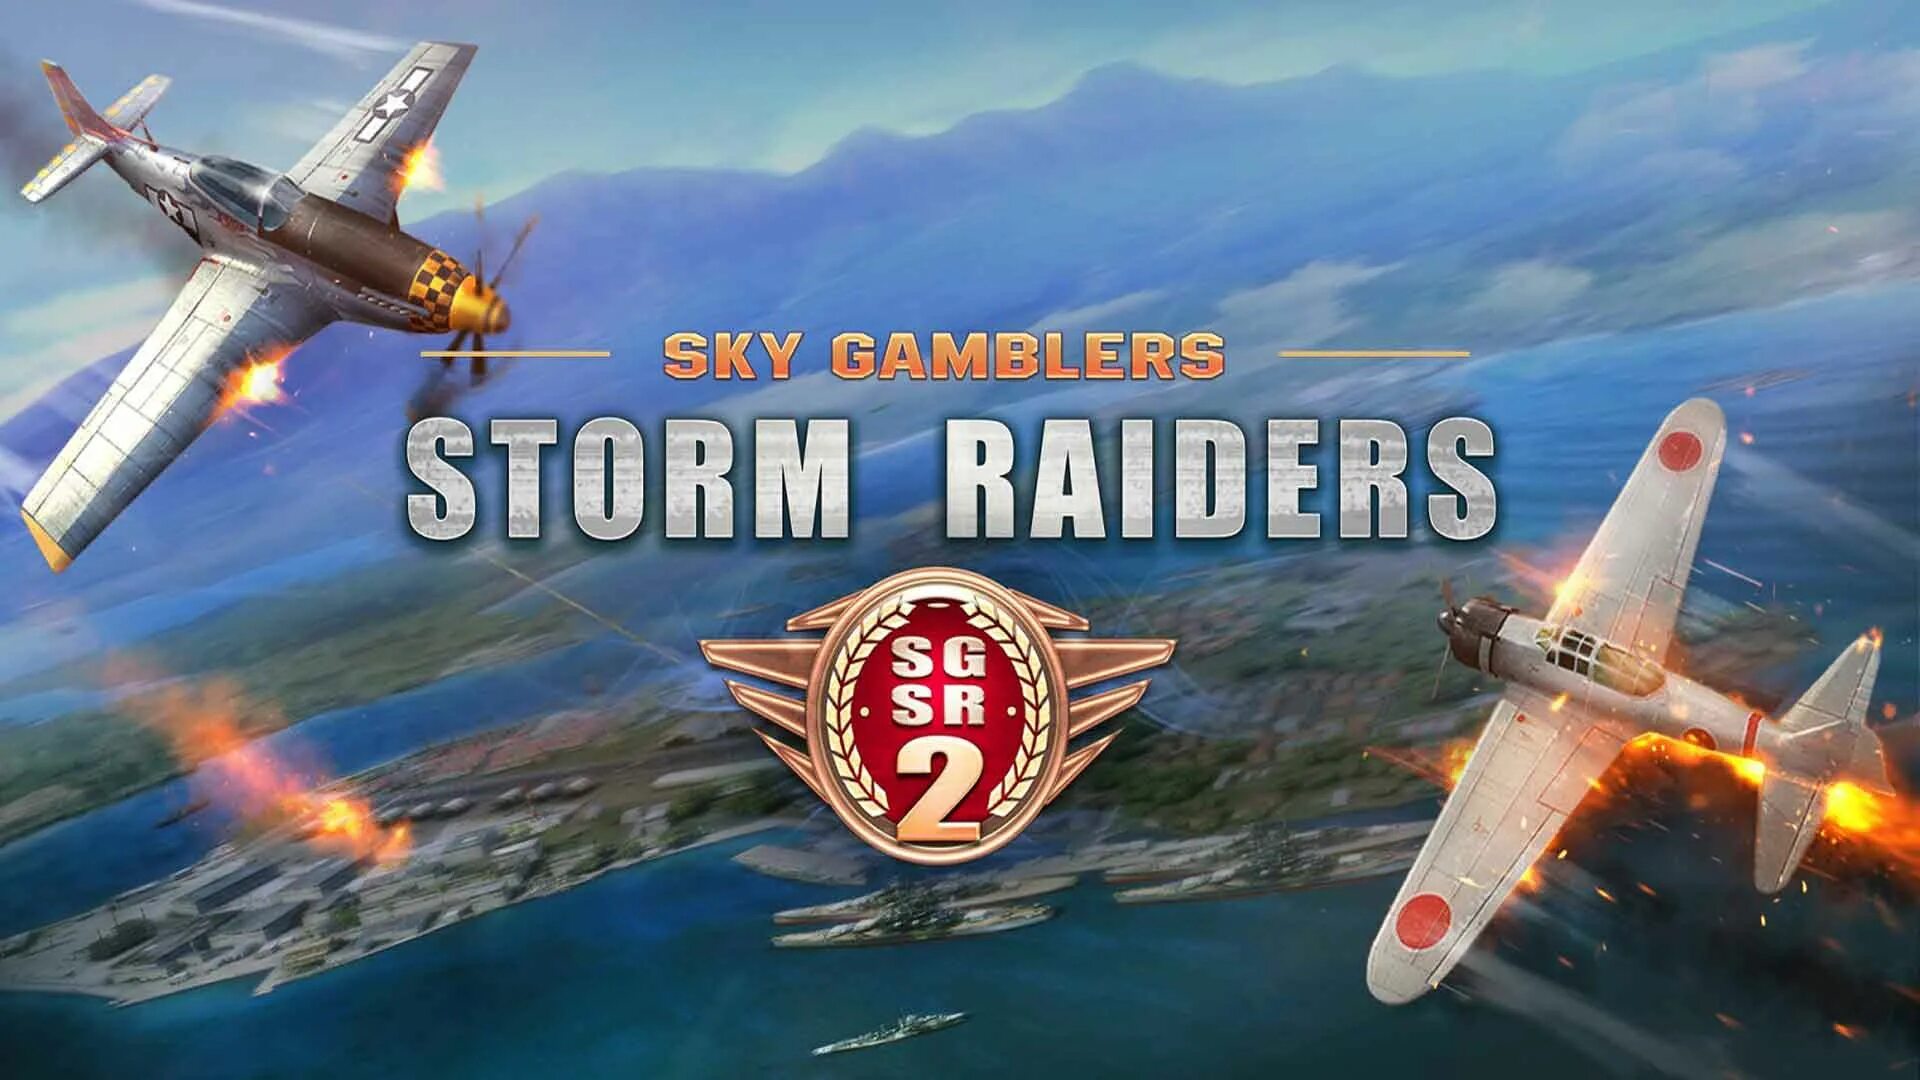 Sky Gamblers Storm Raiders 2. Sky Gamblers.